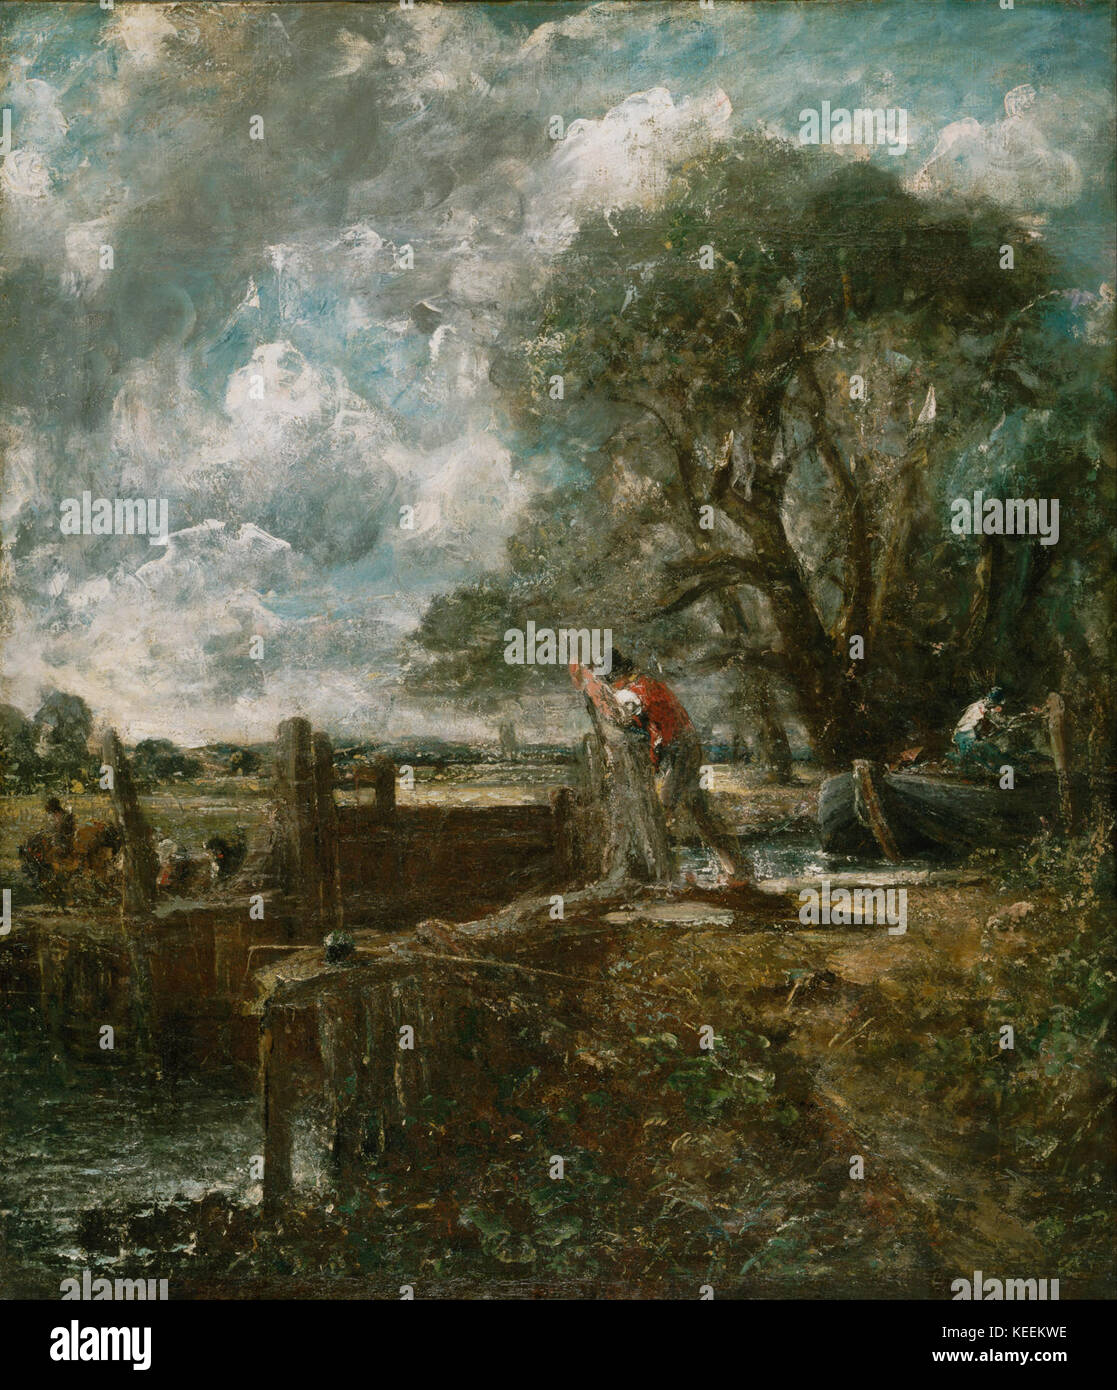 John Constable - Simple English Wikipedia, the free encyclopedia